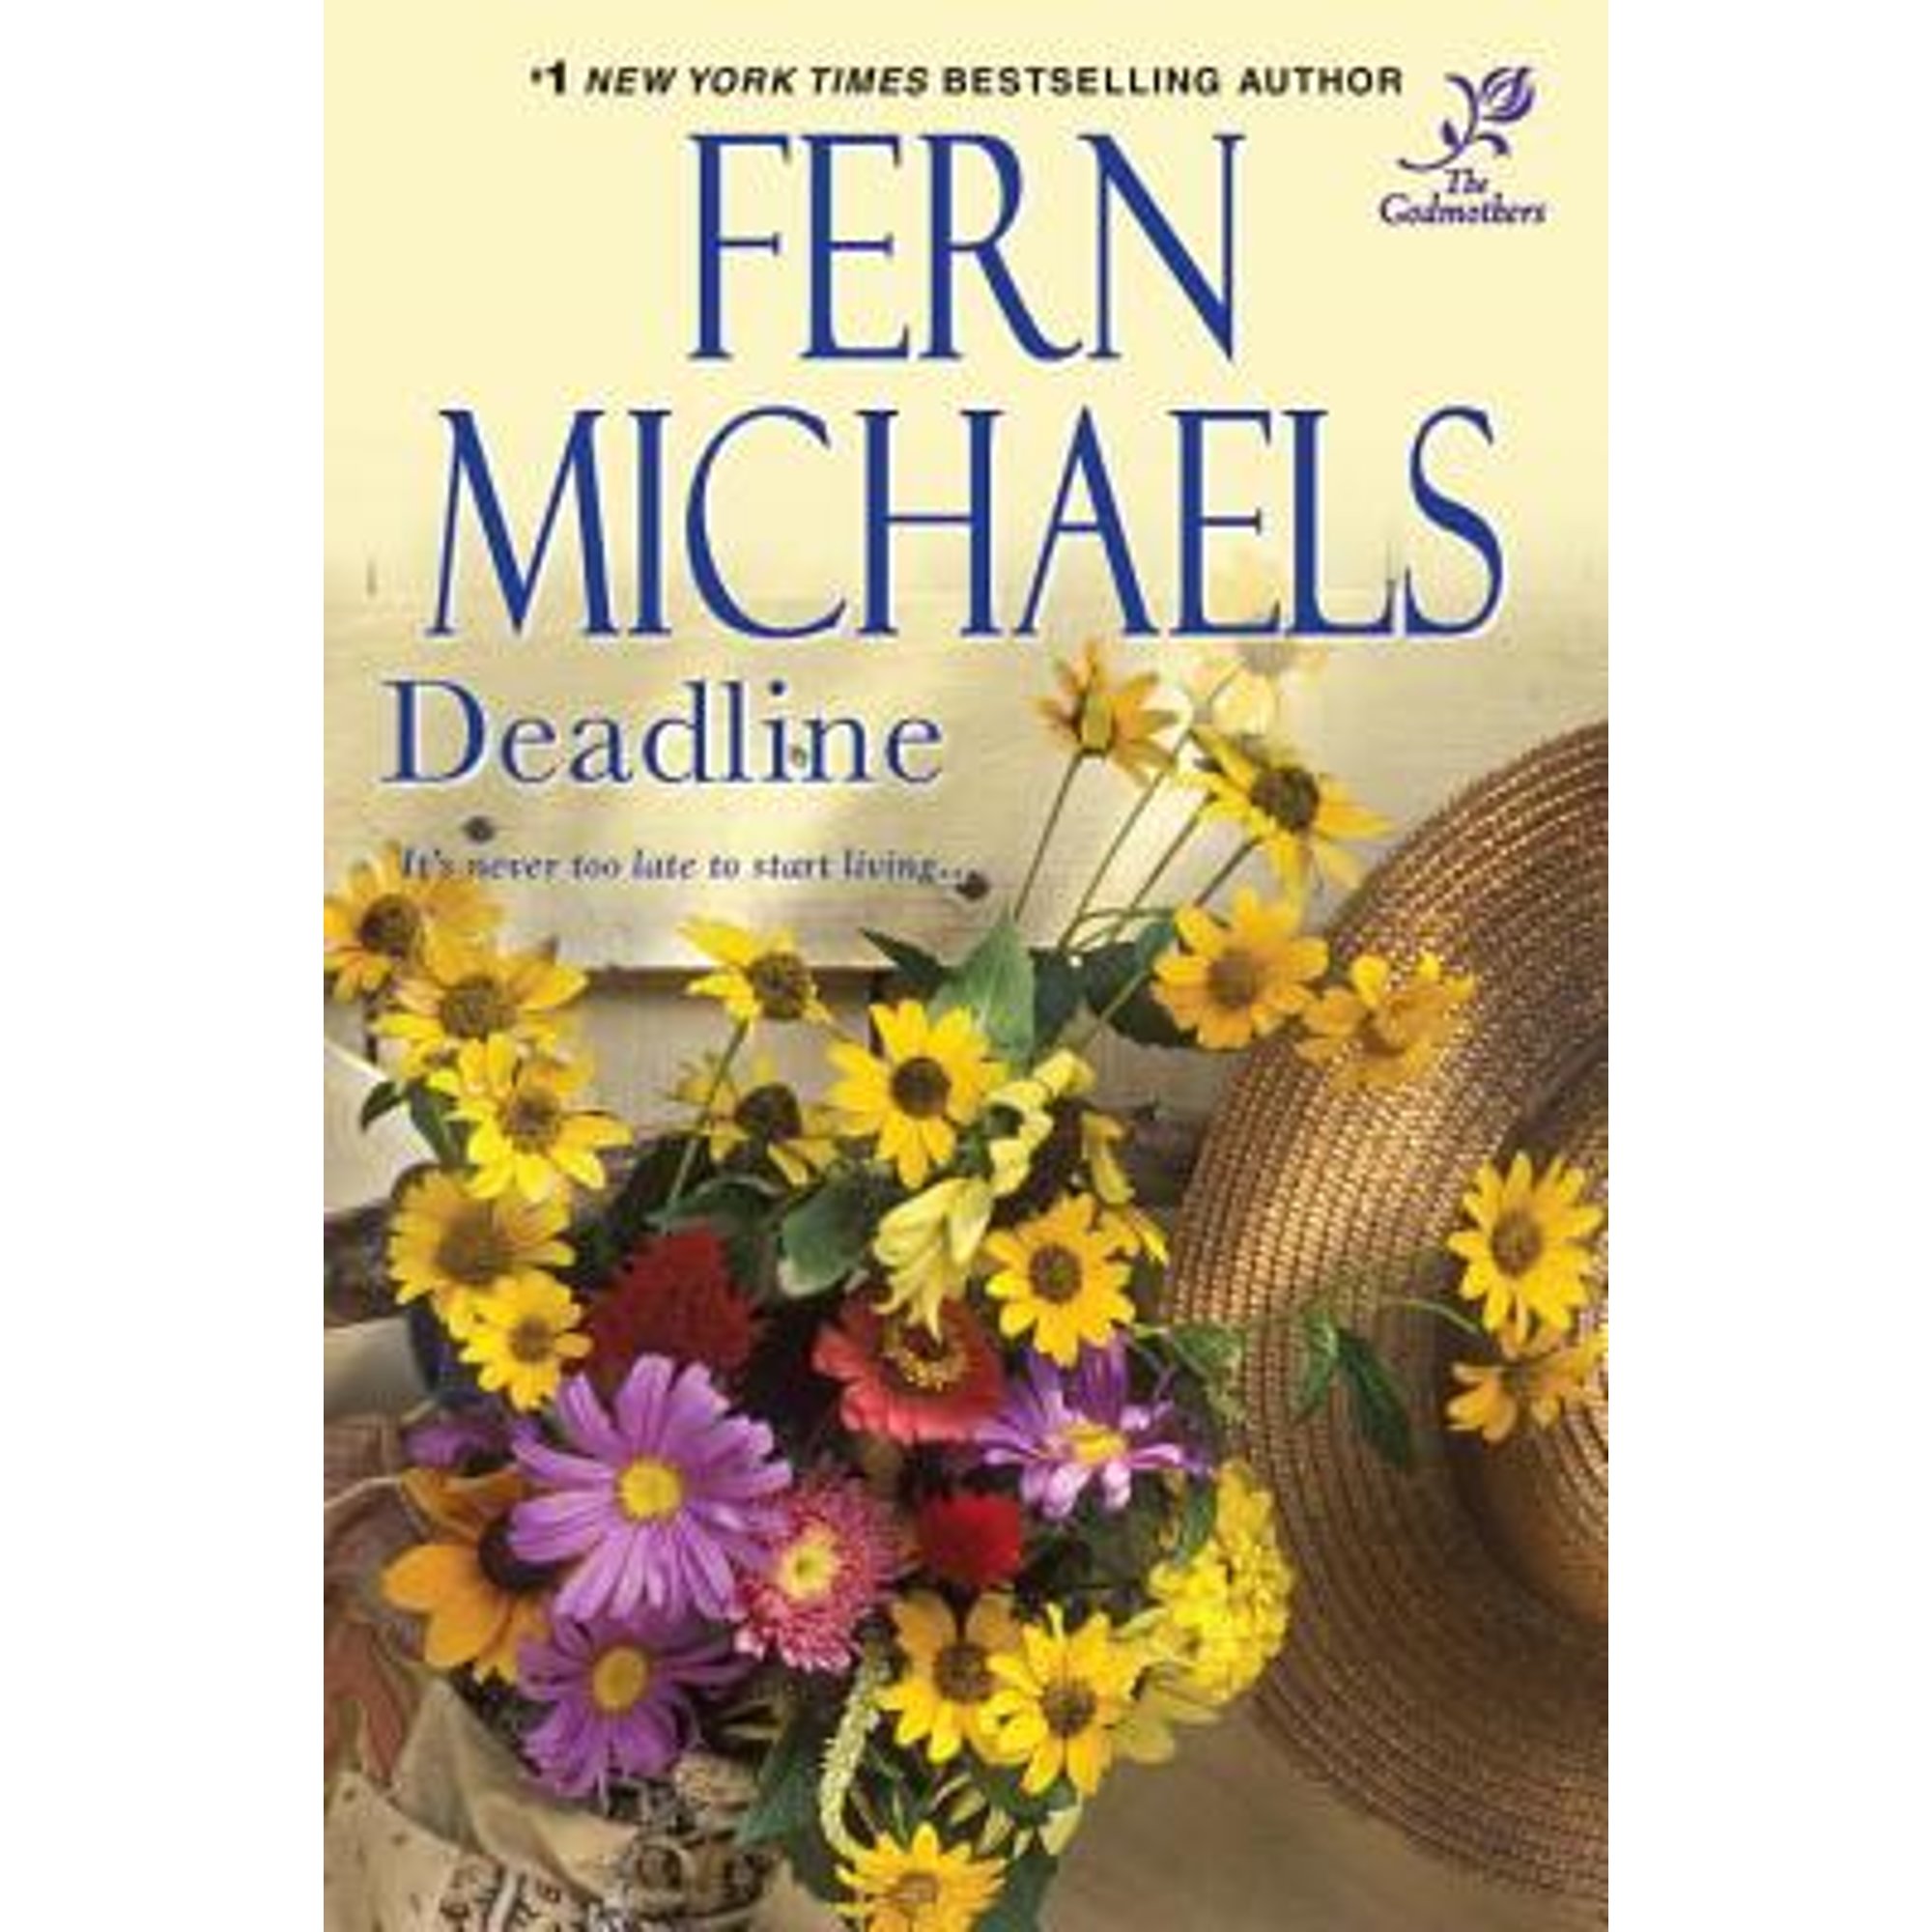 Deadline (Paperback) by Fern Michaels - image 1 of 1